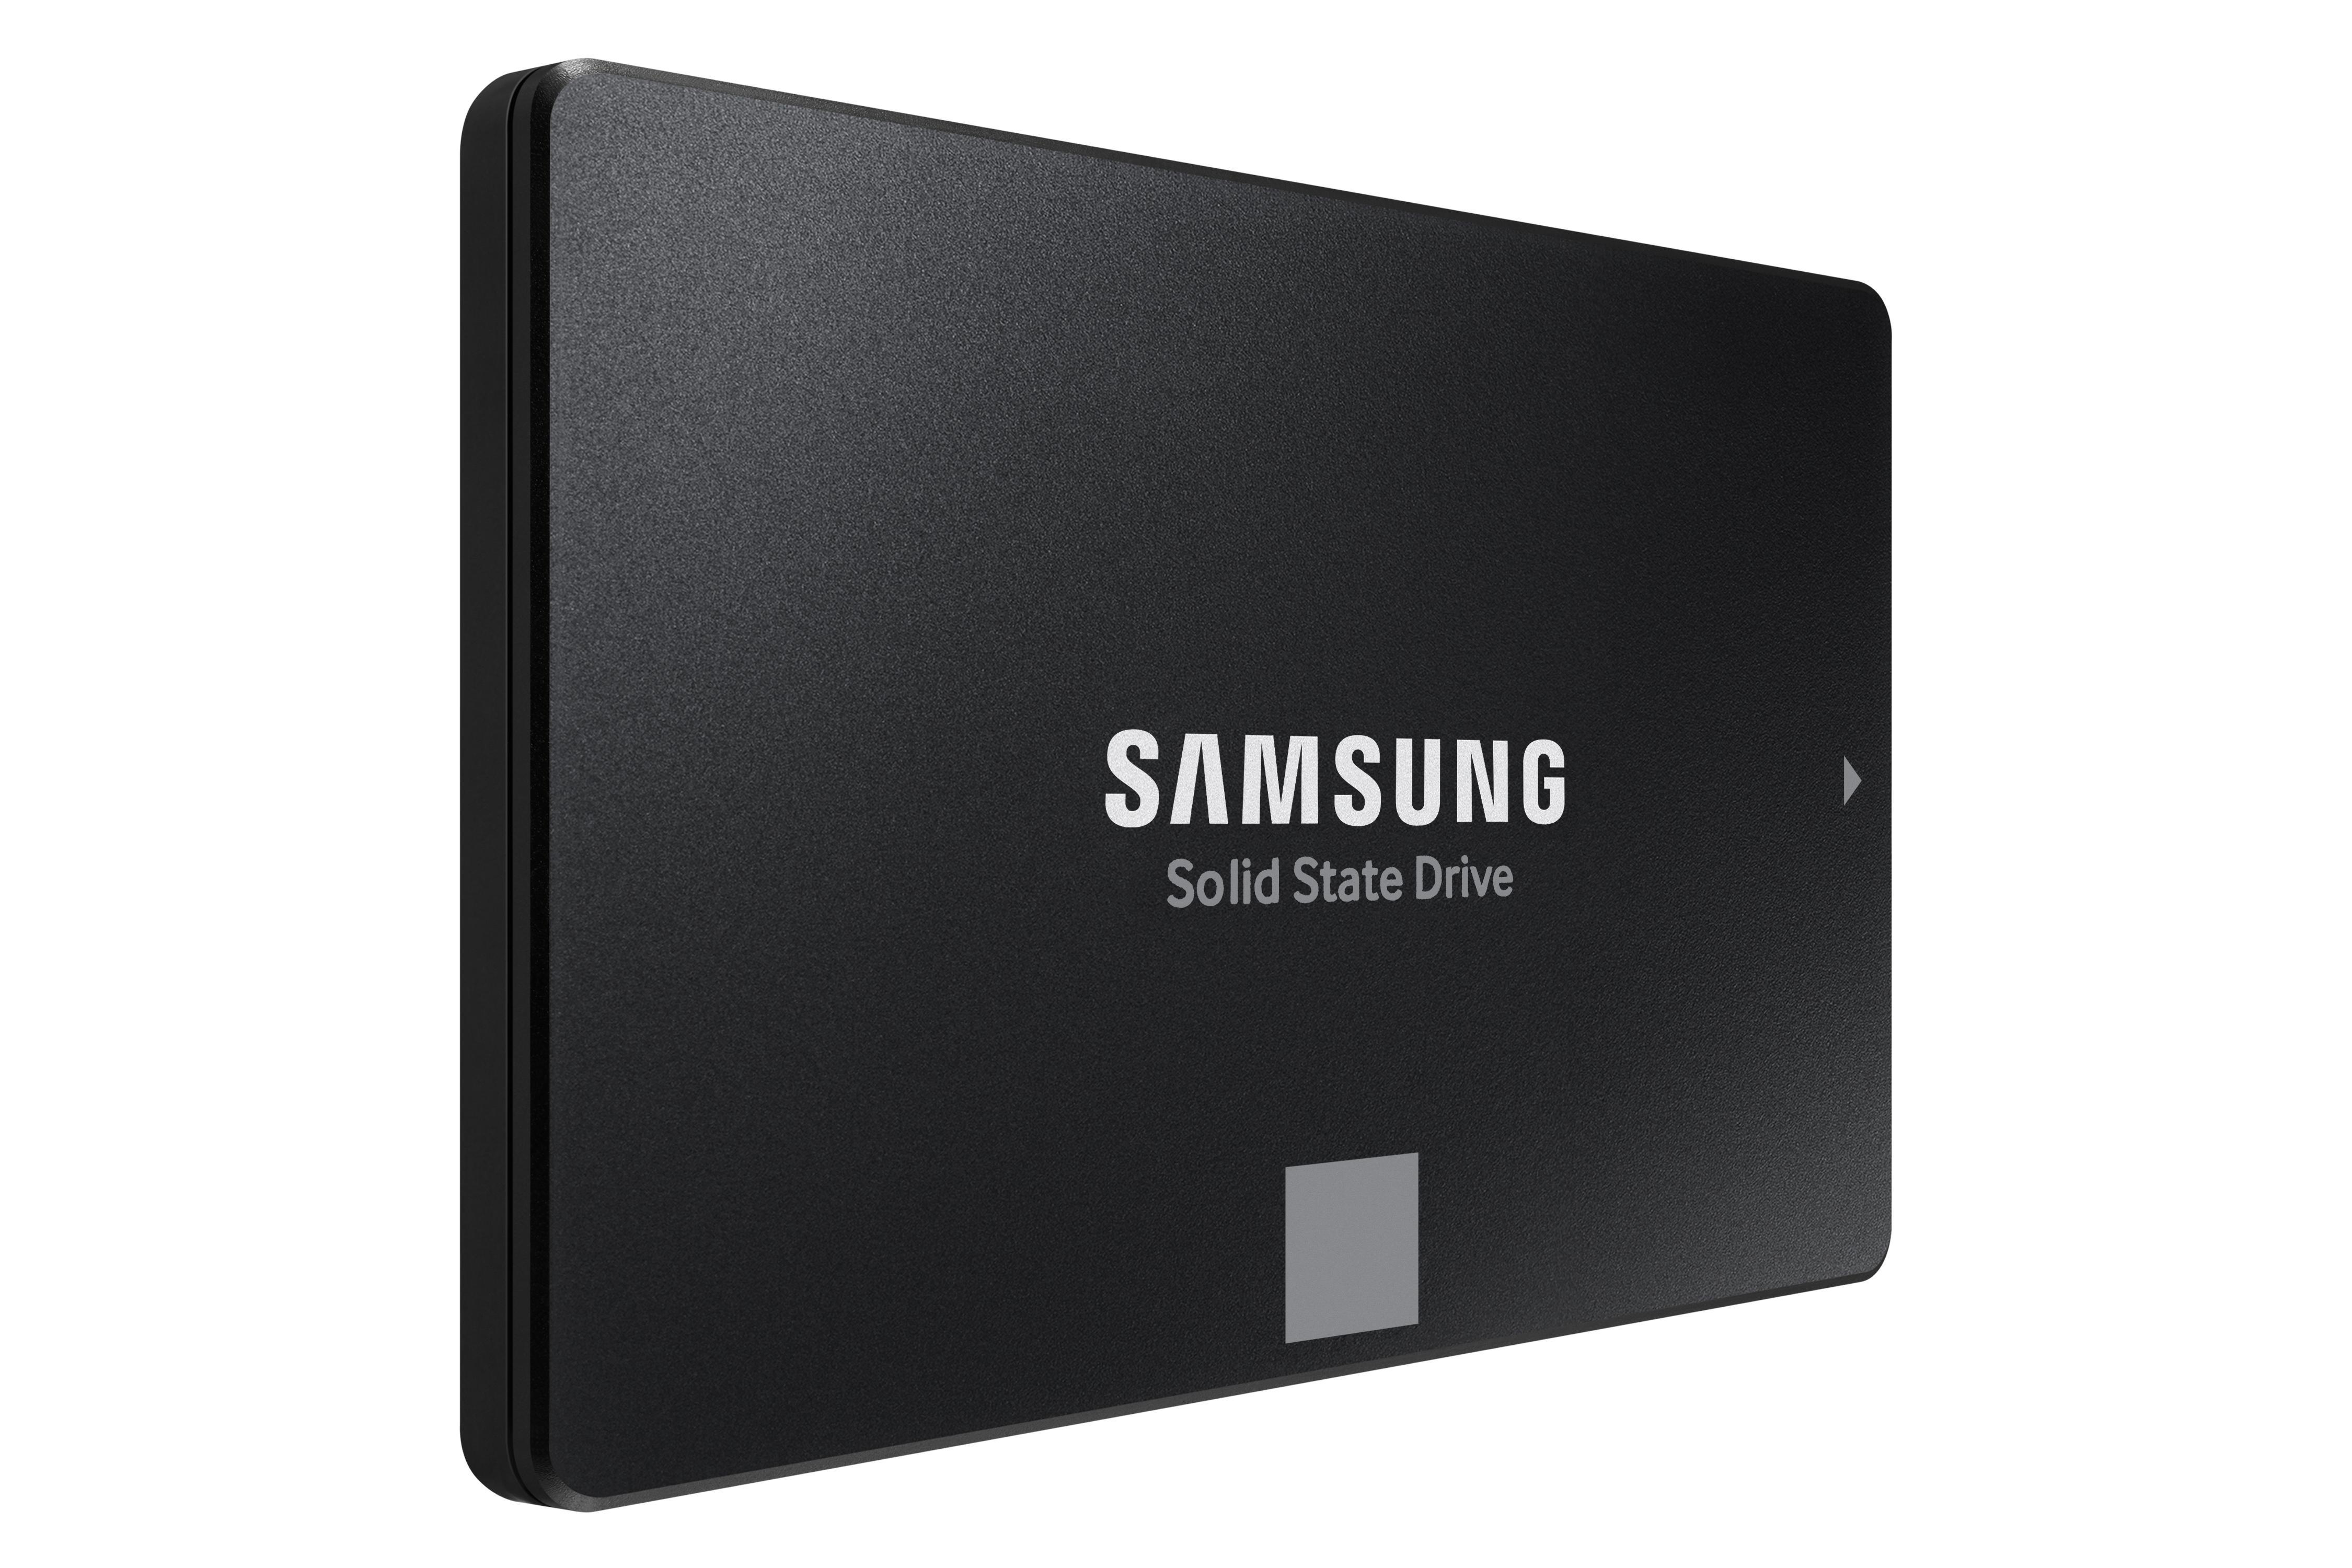 SAMSUNG 870 EVO Festplatte Gbps, 6 SSD intern 2,5 TB 1 Zoll, SATA Retail